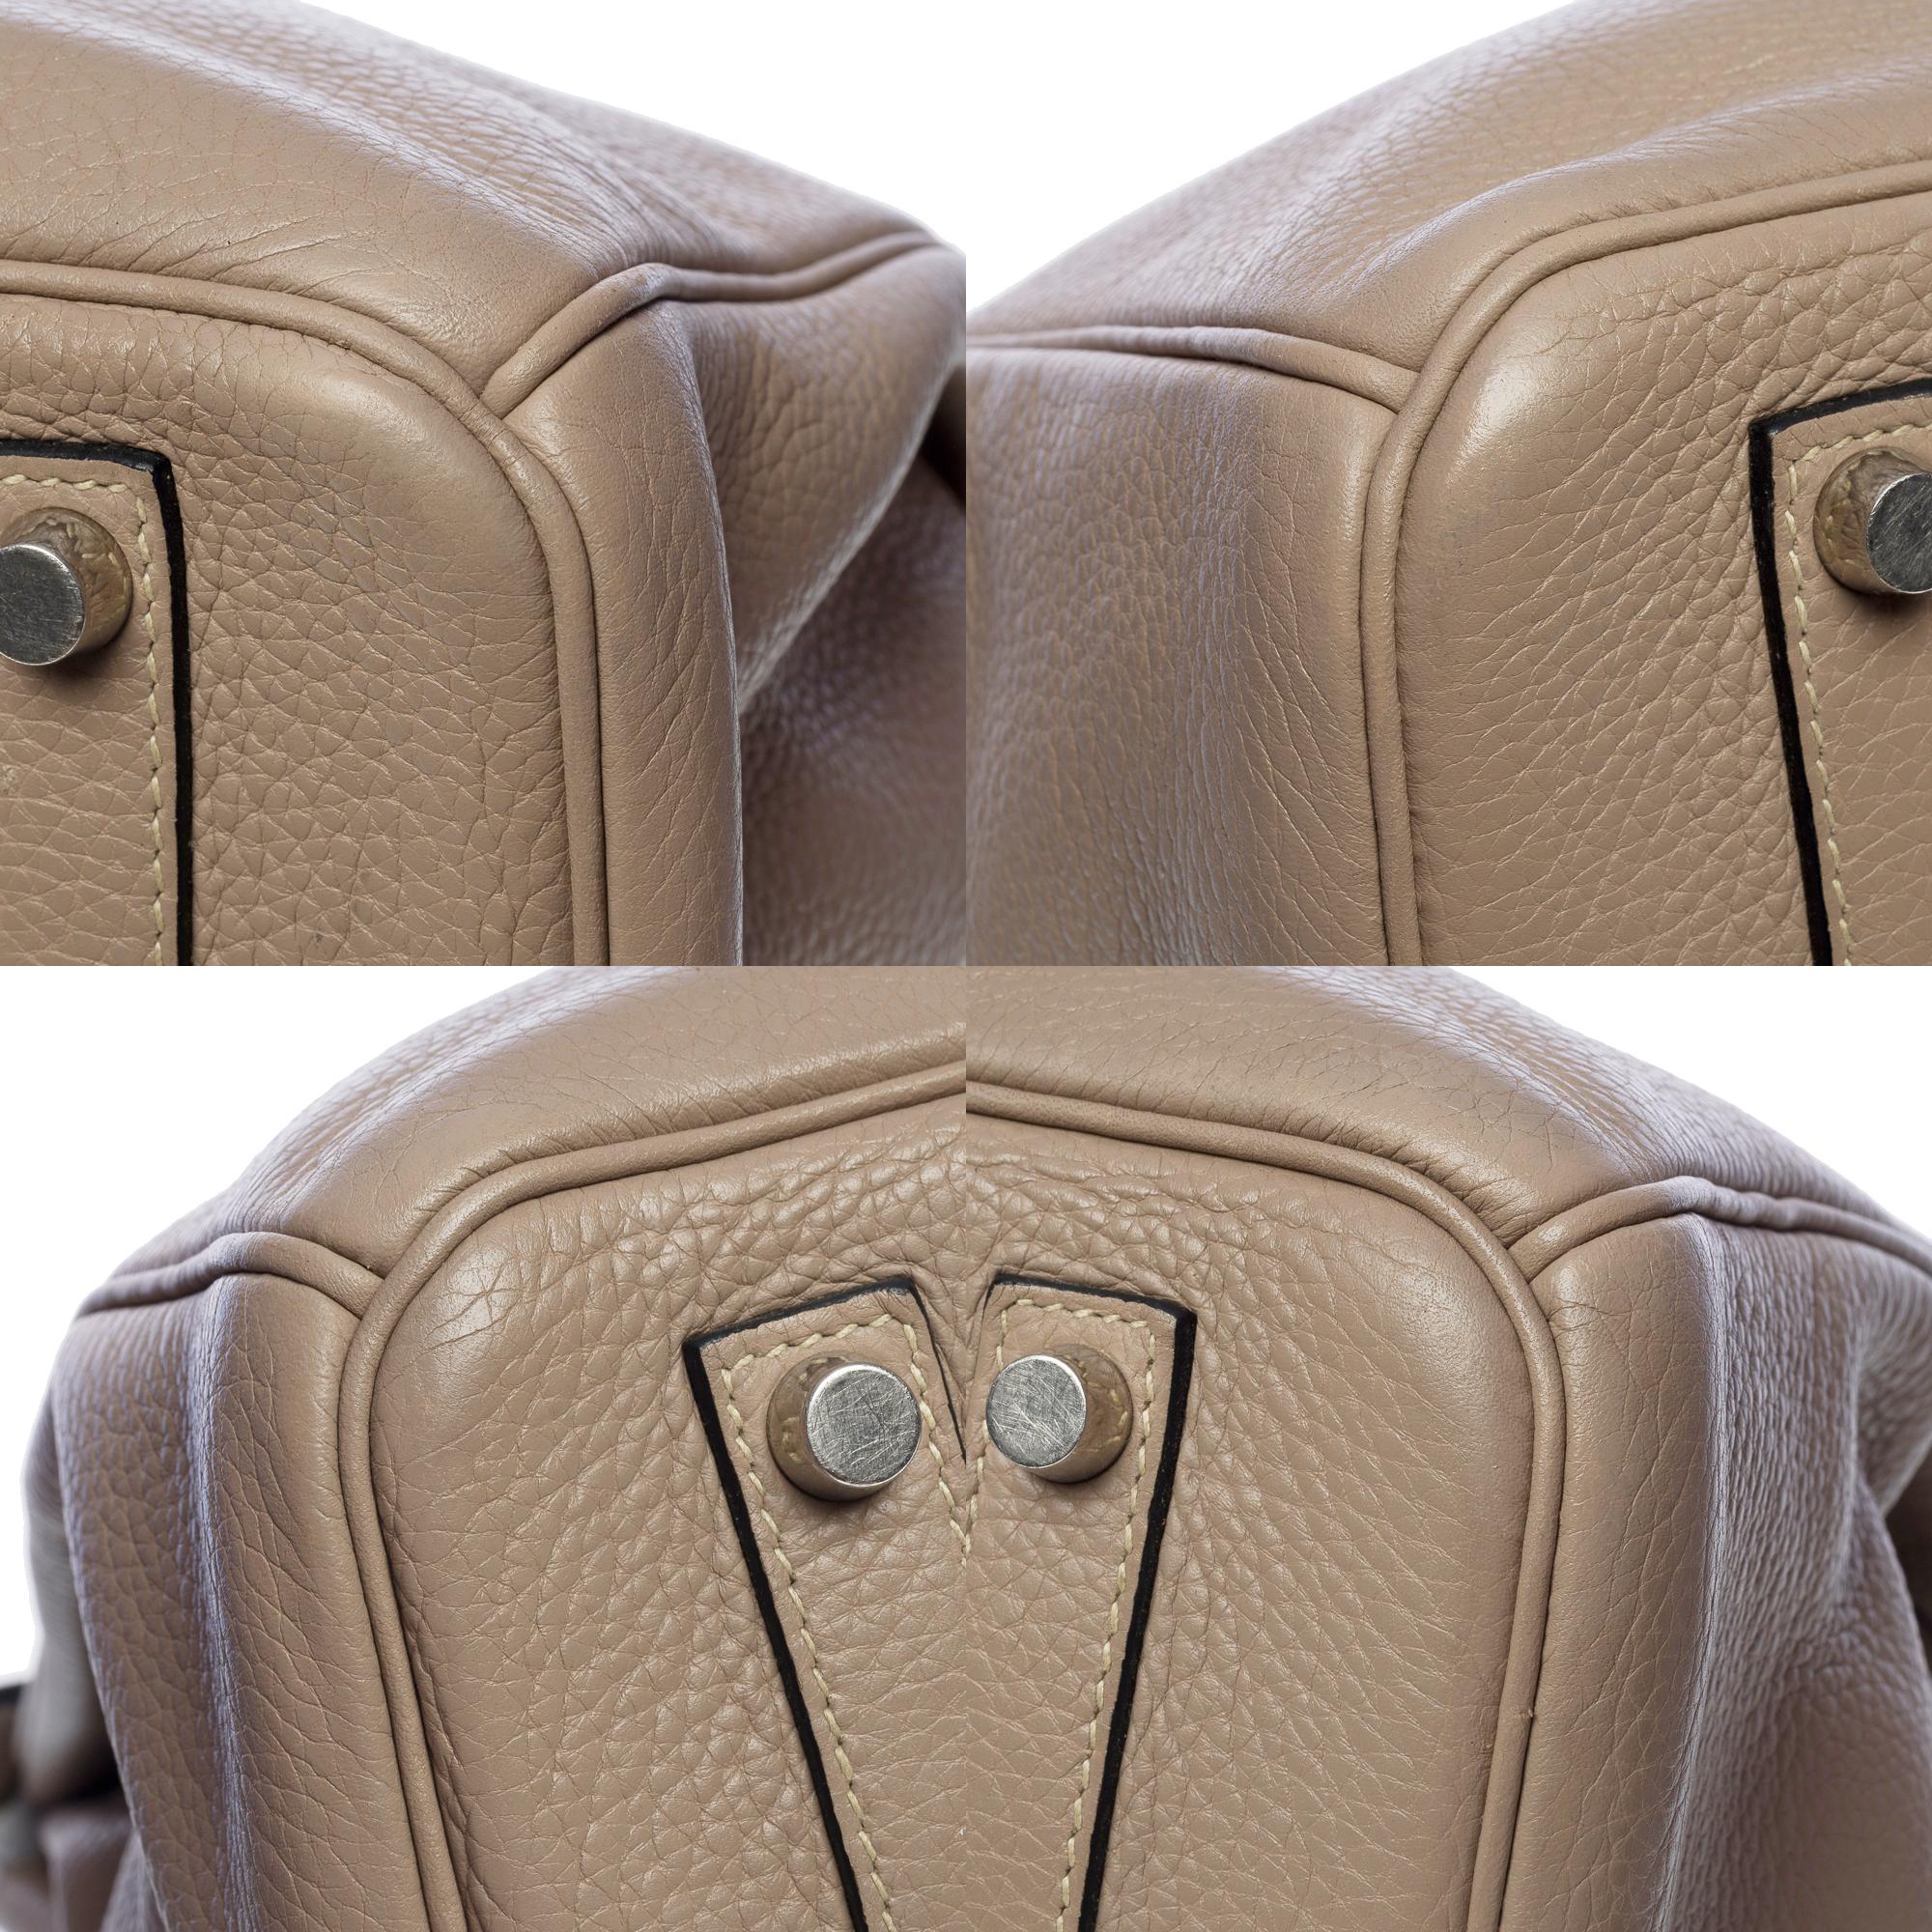 Women's or Men's Superb Hermes Birkin 35 cm handbag in dove gray Togo leather, SHW